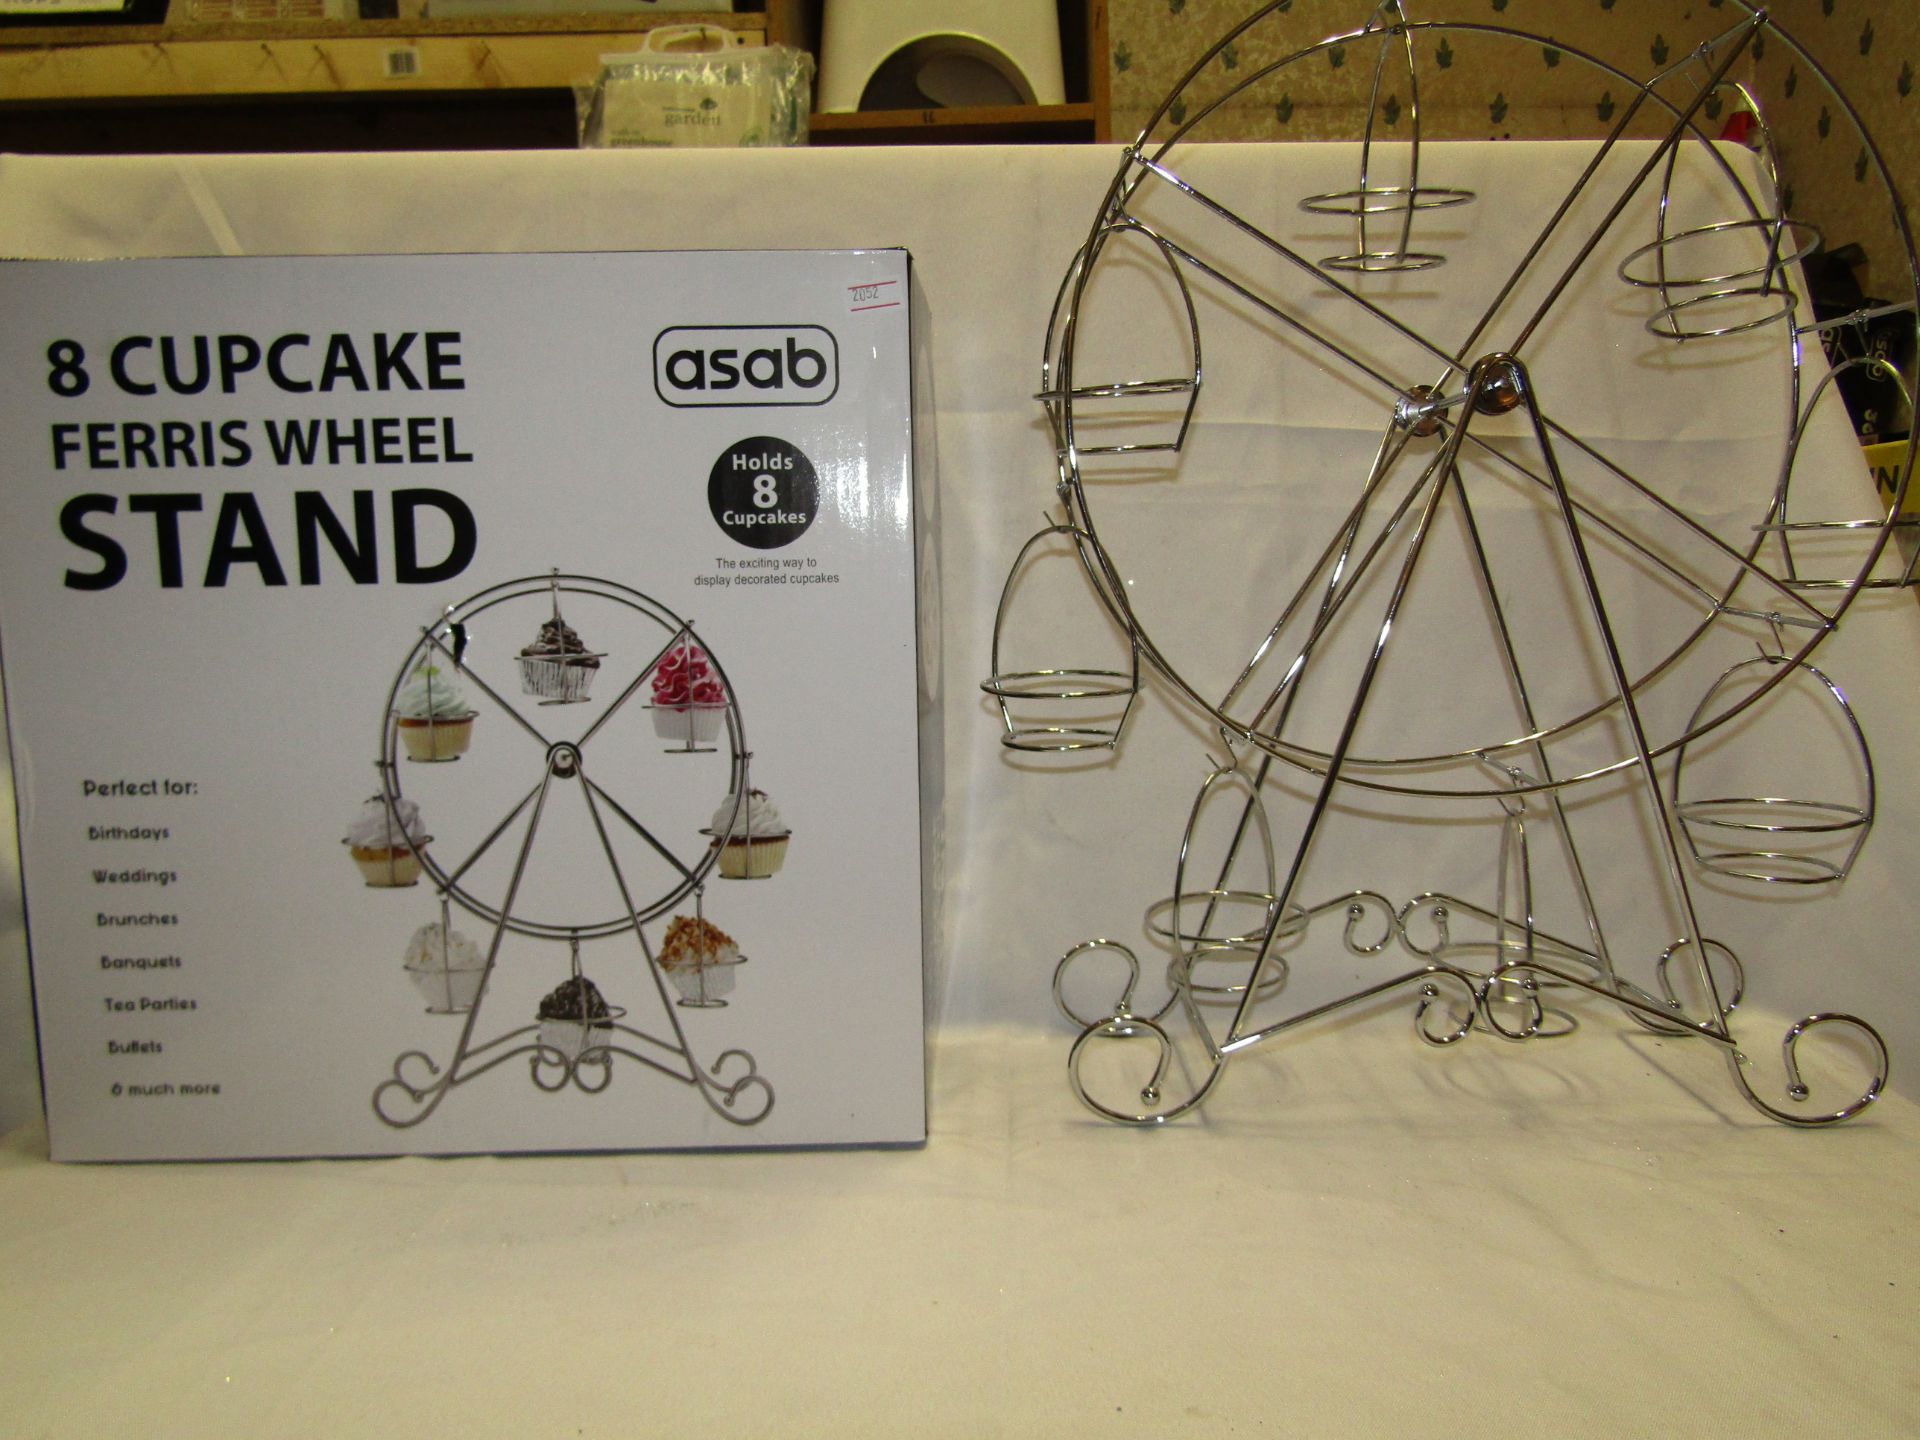 1 x Asab 8 Cupcake Ferris Wheel Stand  boxed new